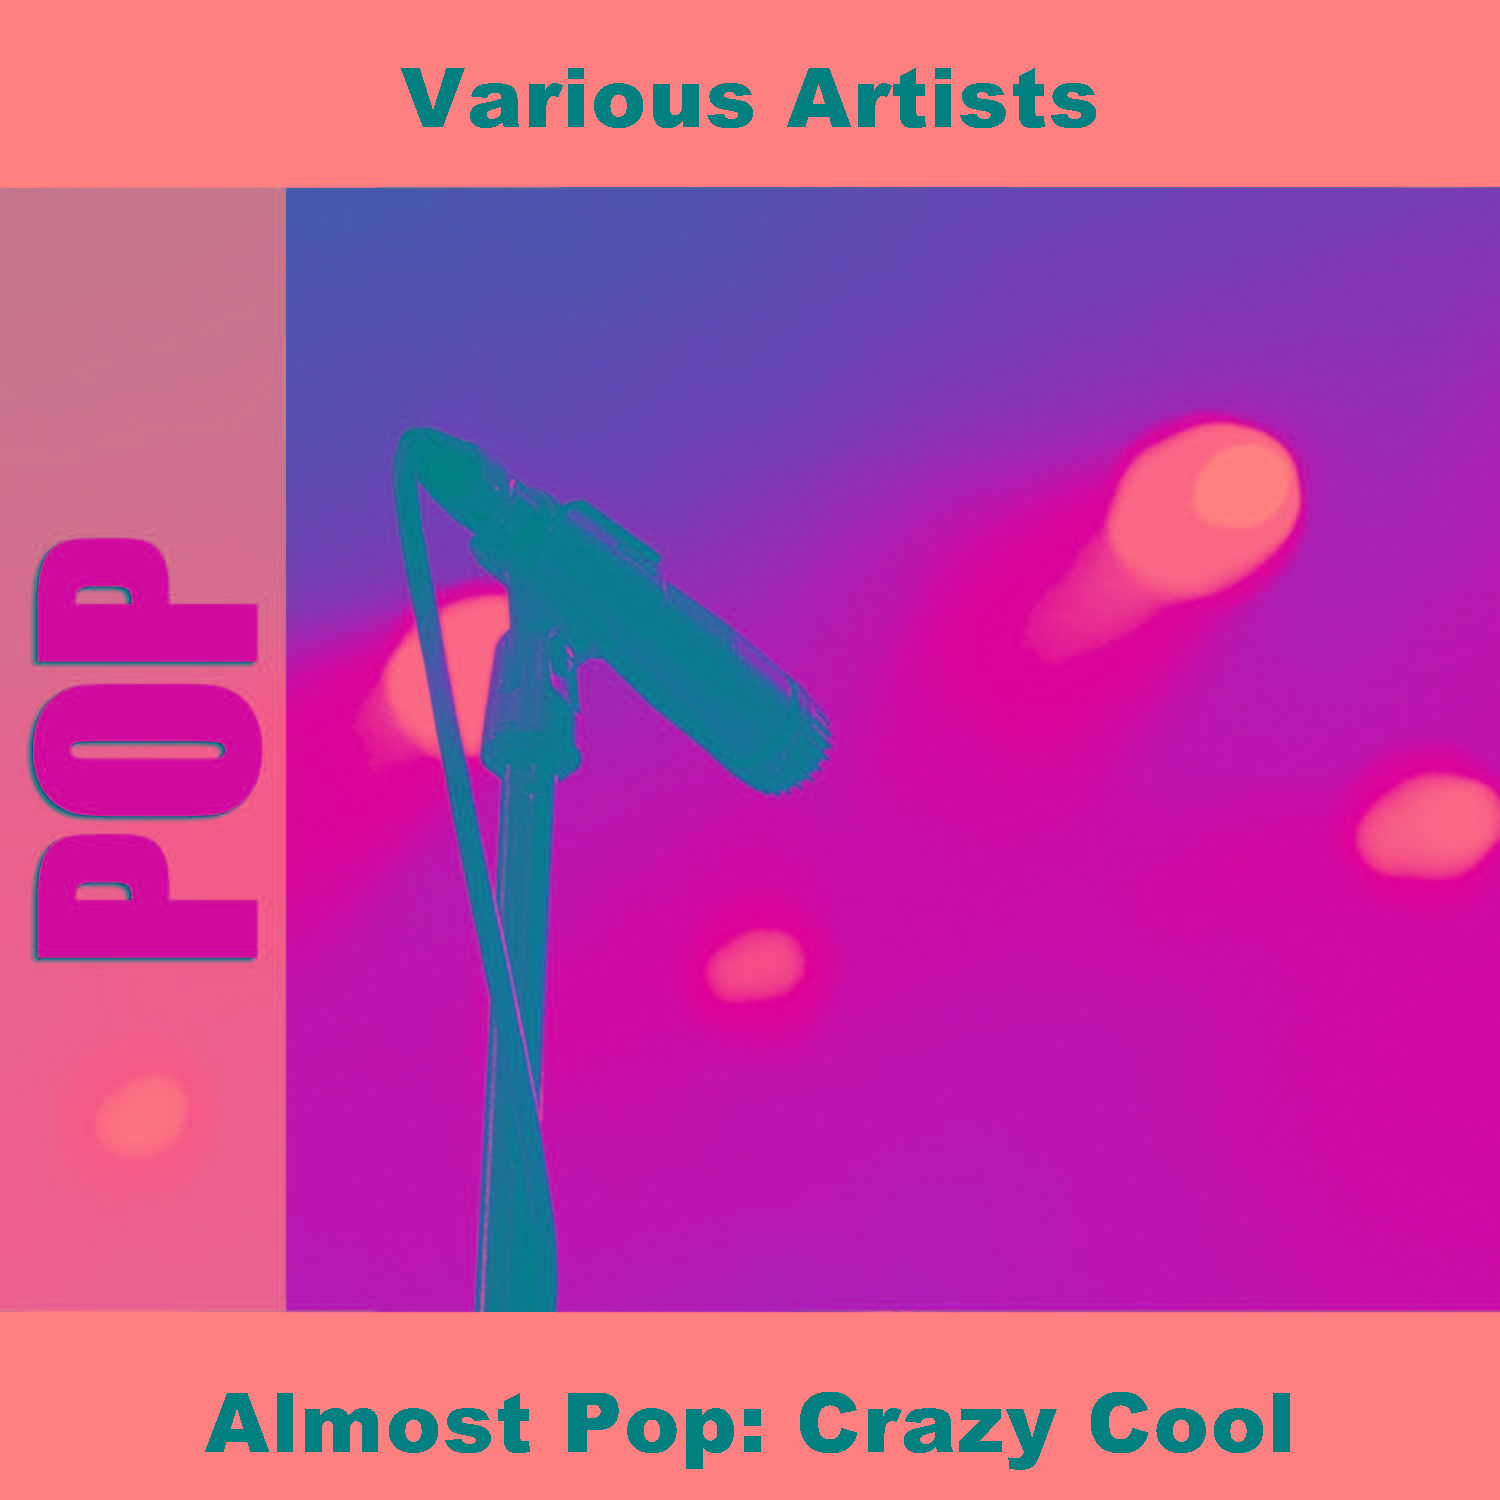 Almost Pop: Crazy Cool